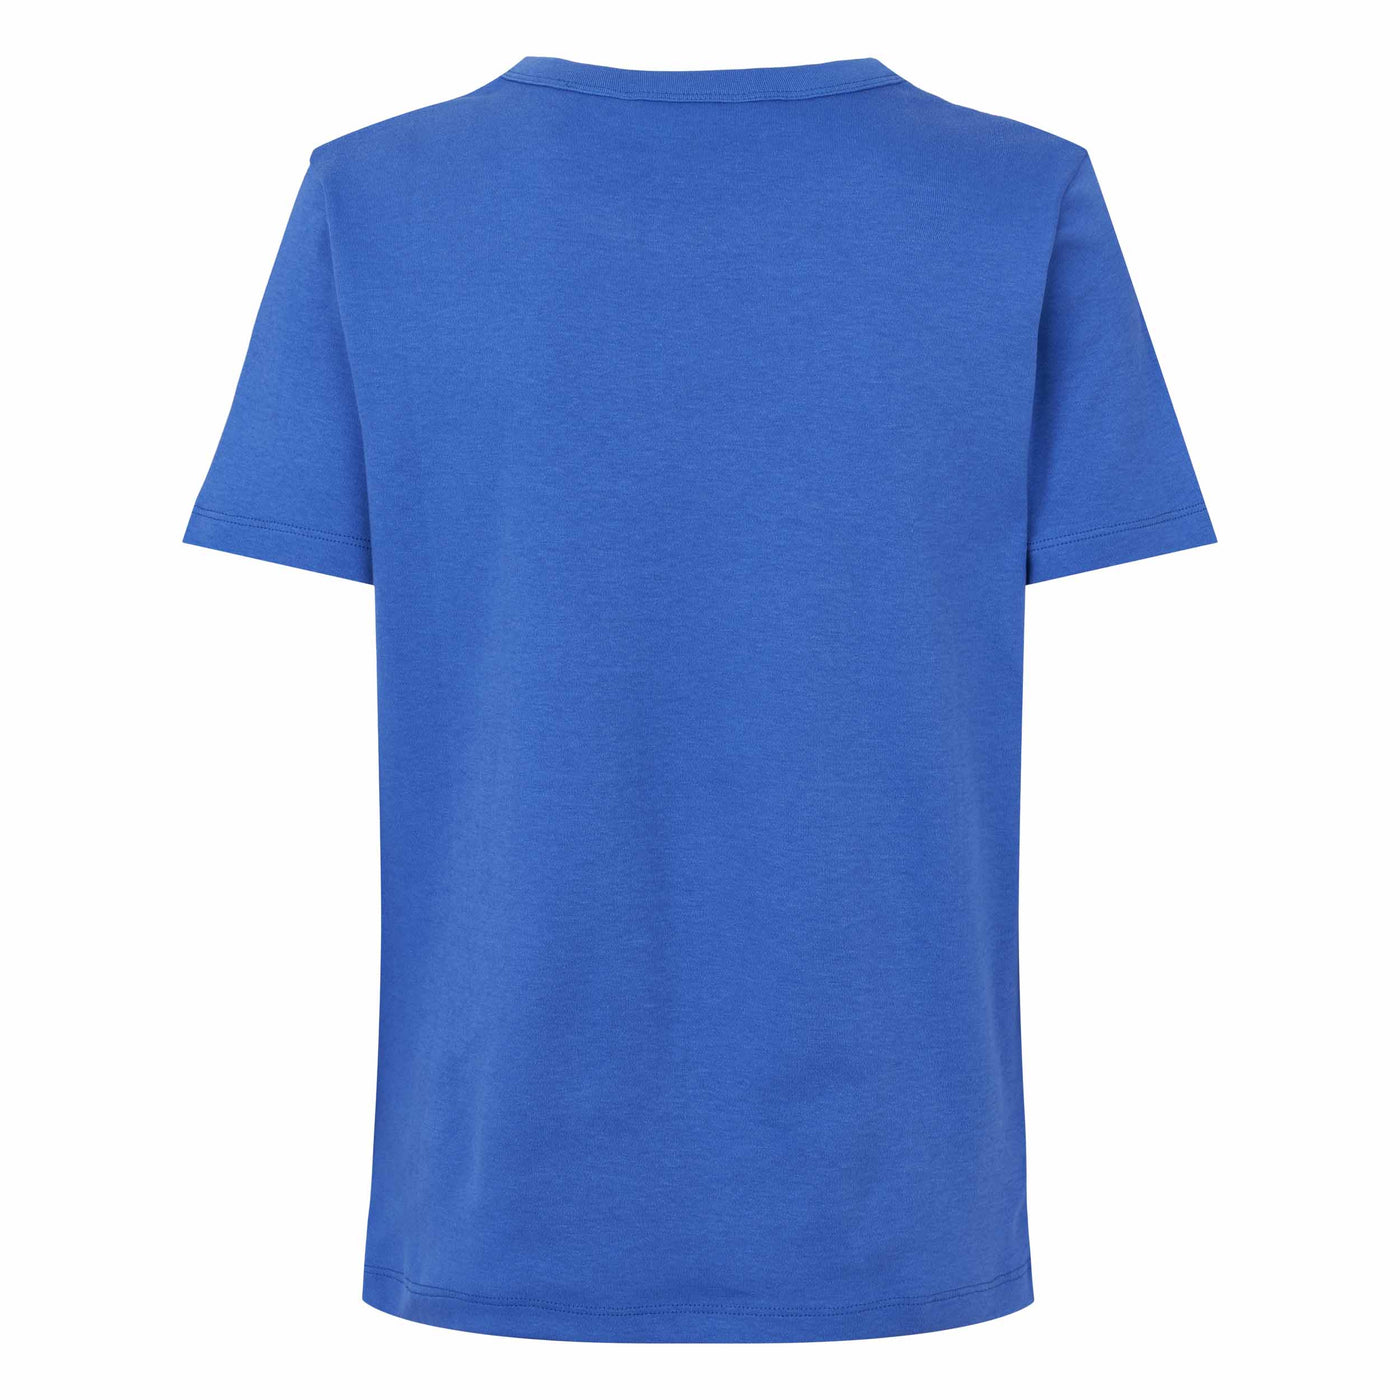 Soft Rebels SRHella T-shirt Tops & t-shirts 161 Dazzling blue